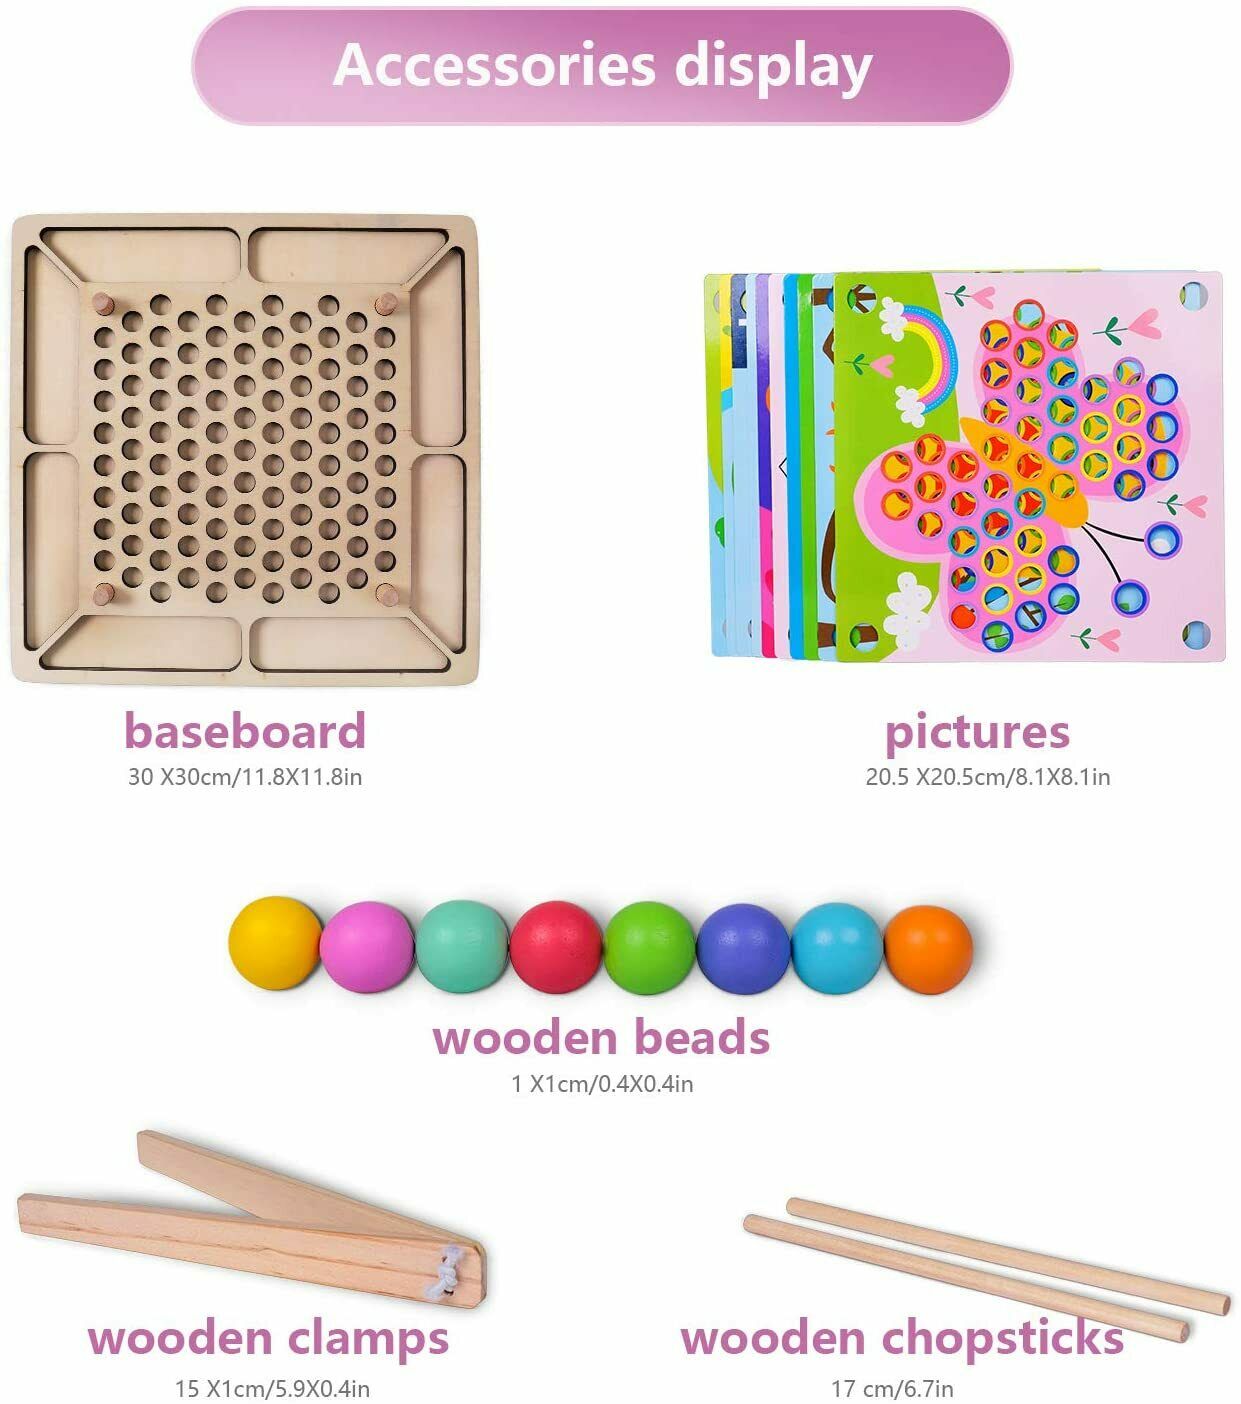 Wooden Kids Montessori Preschool Educational Learning Building blocks Busy Board - TOYSHIP